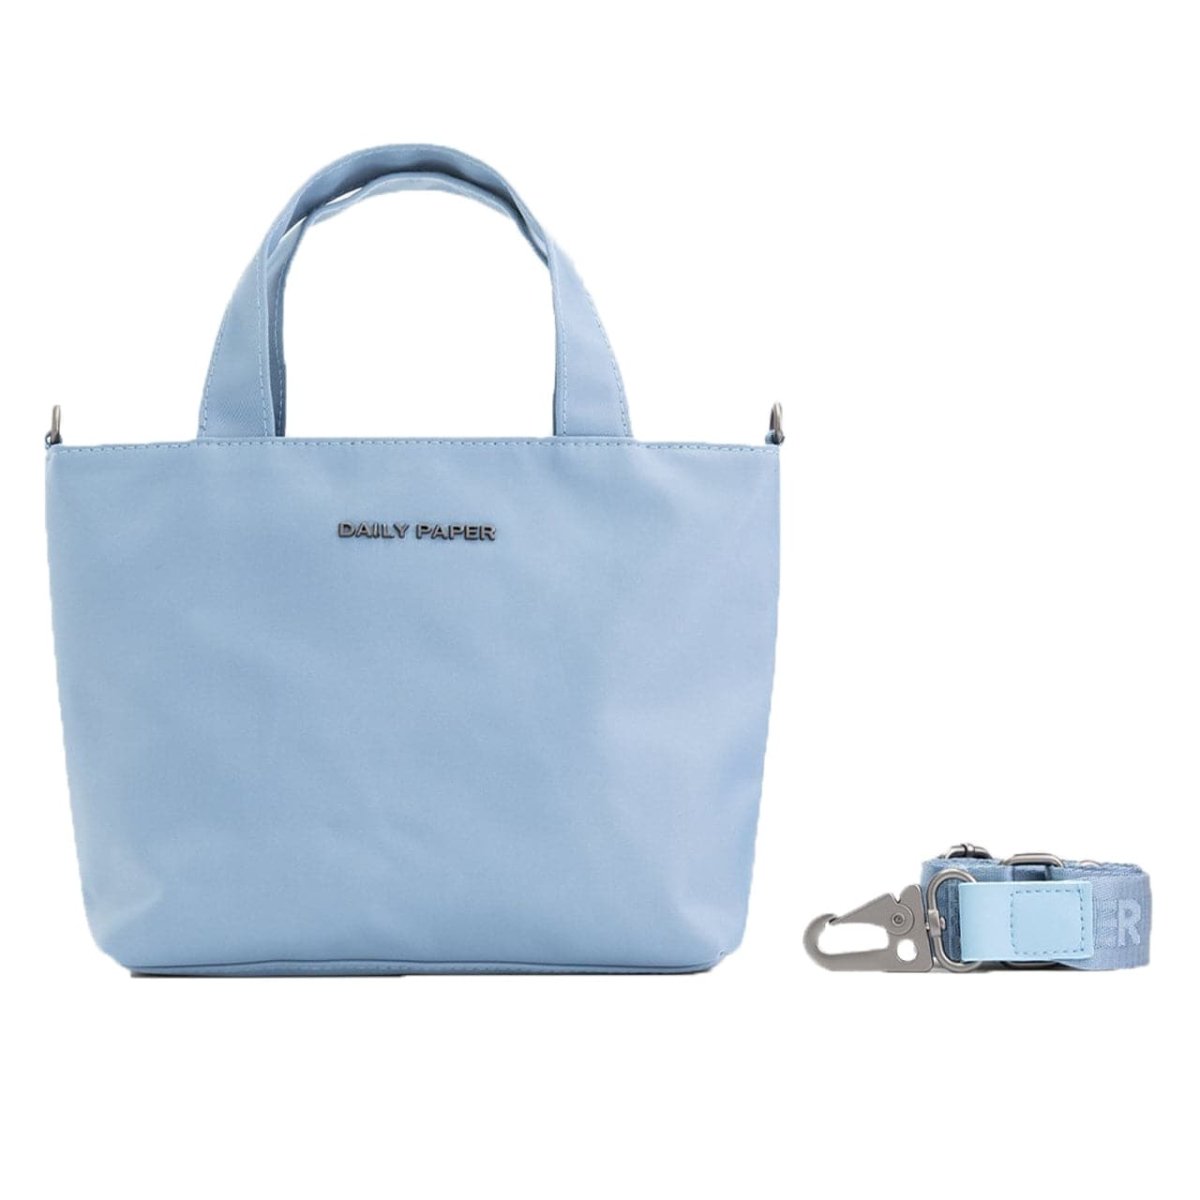 Daily Paper Allure Blue Etiny Bag (Blau)  - Allike Store